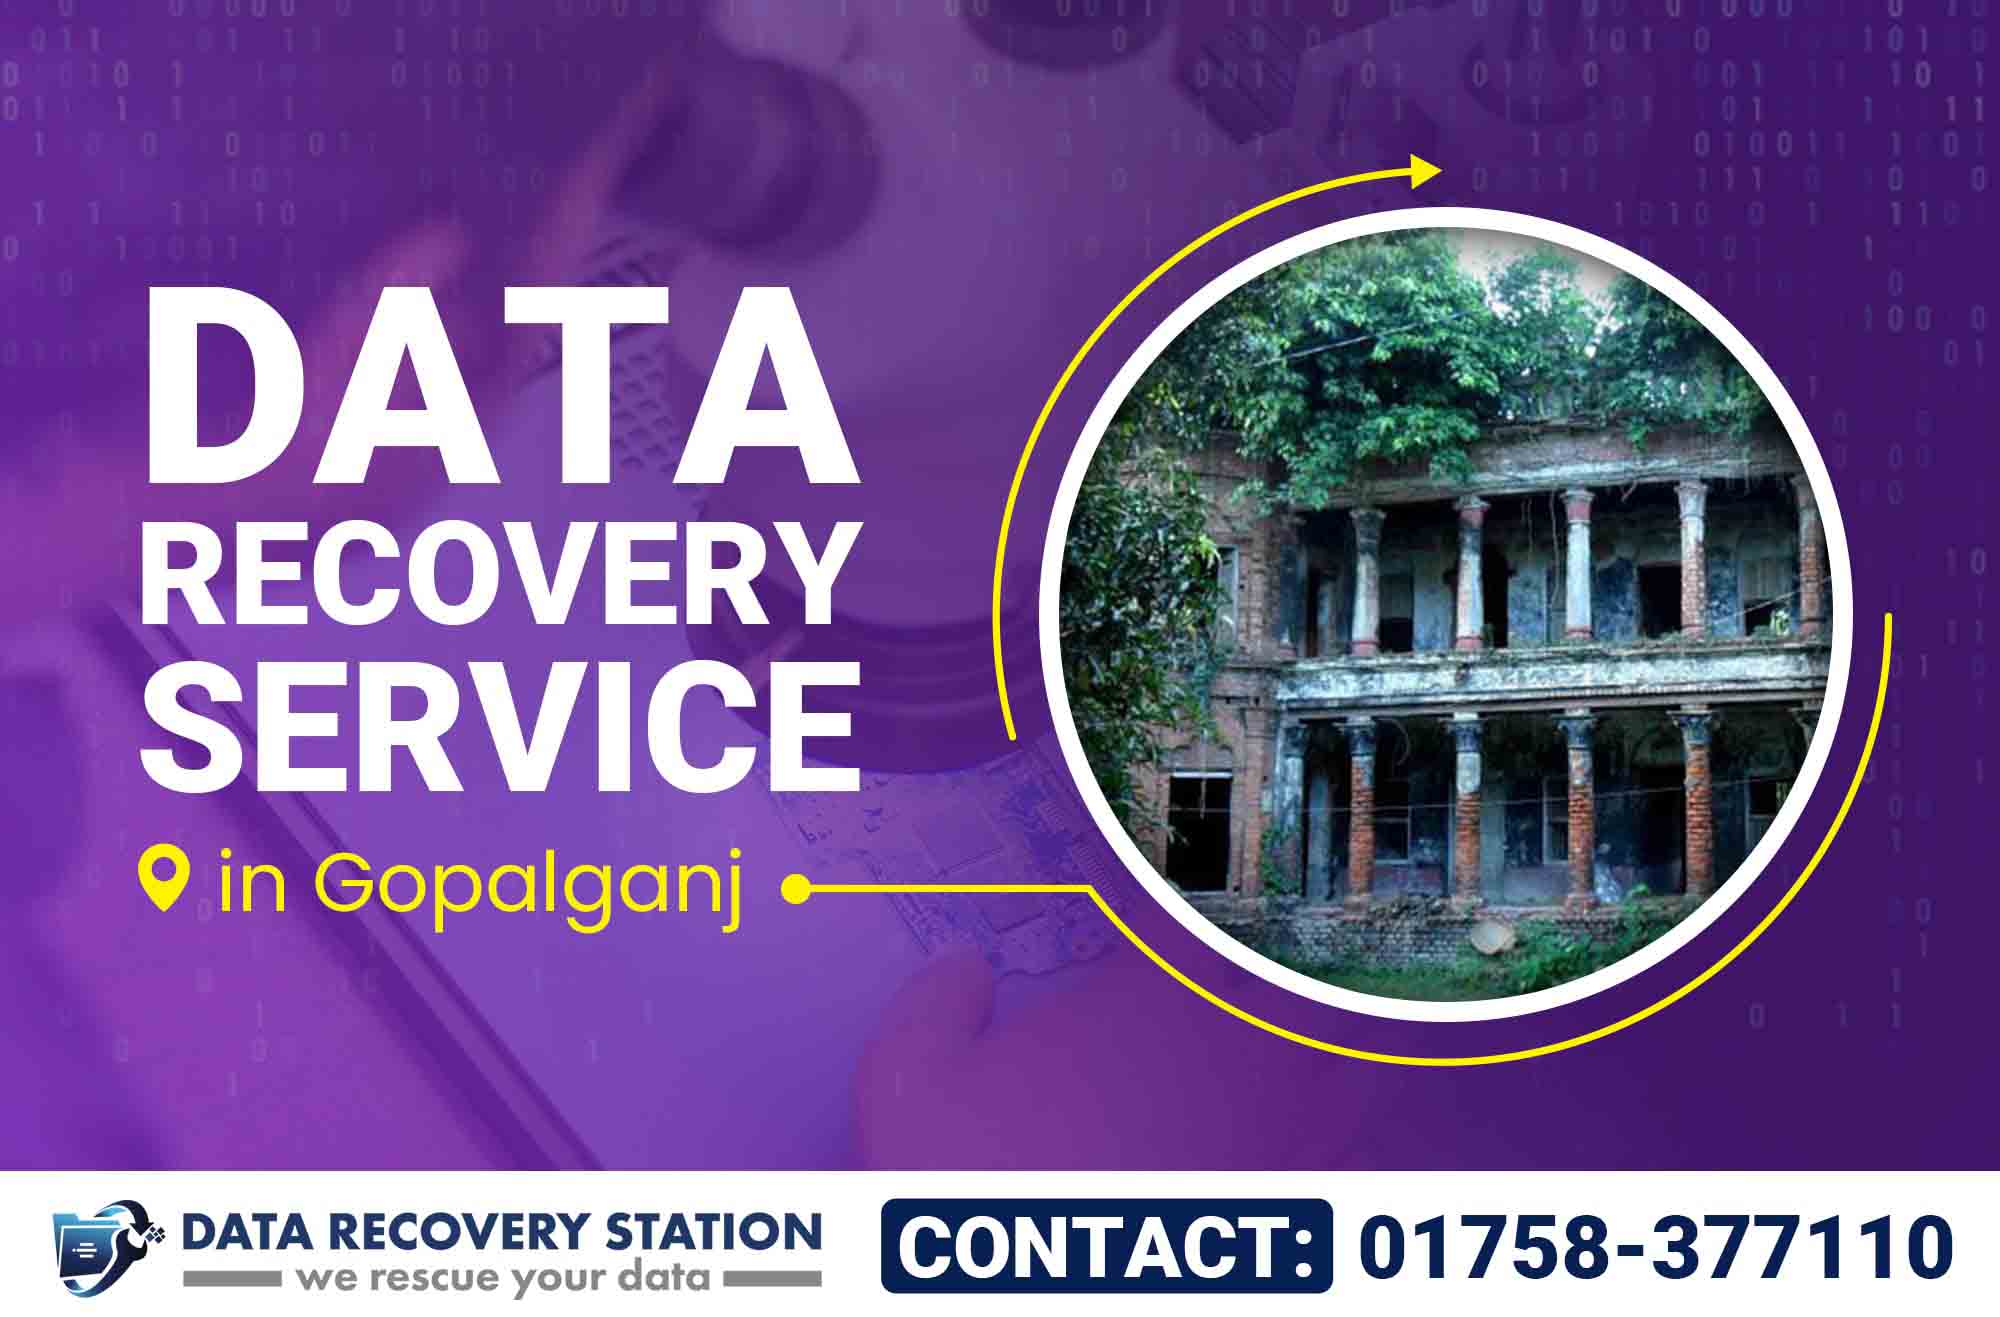 Data recovery service in Gopalganj